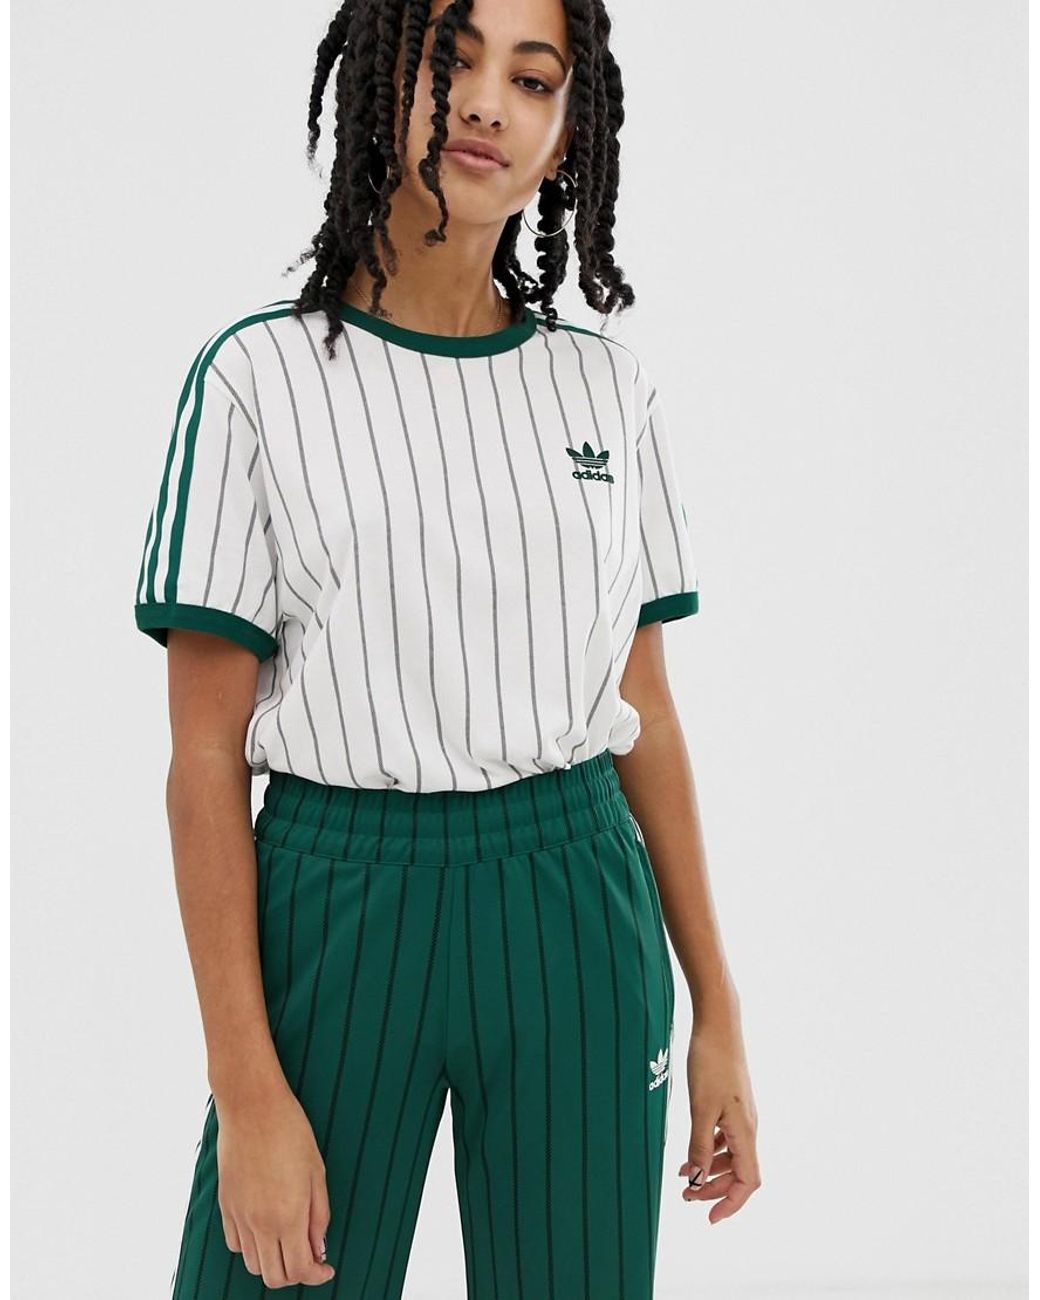 adidas Originals Tshirt In White And Green Stripe | Lyst